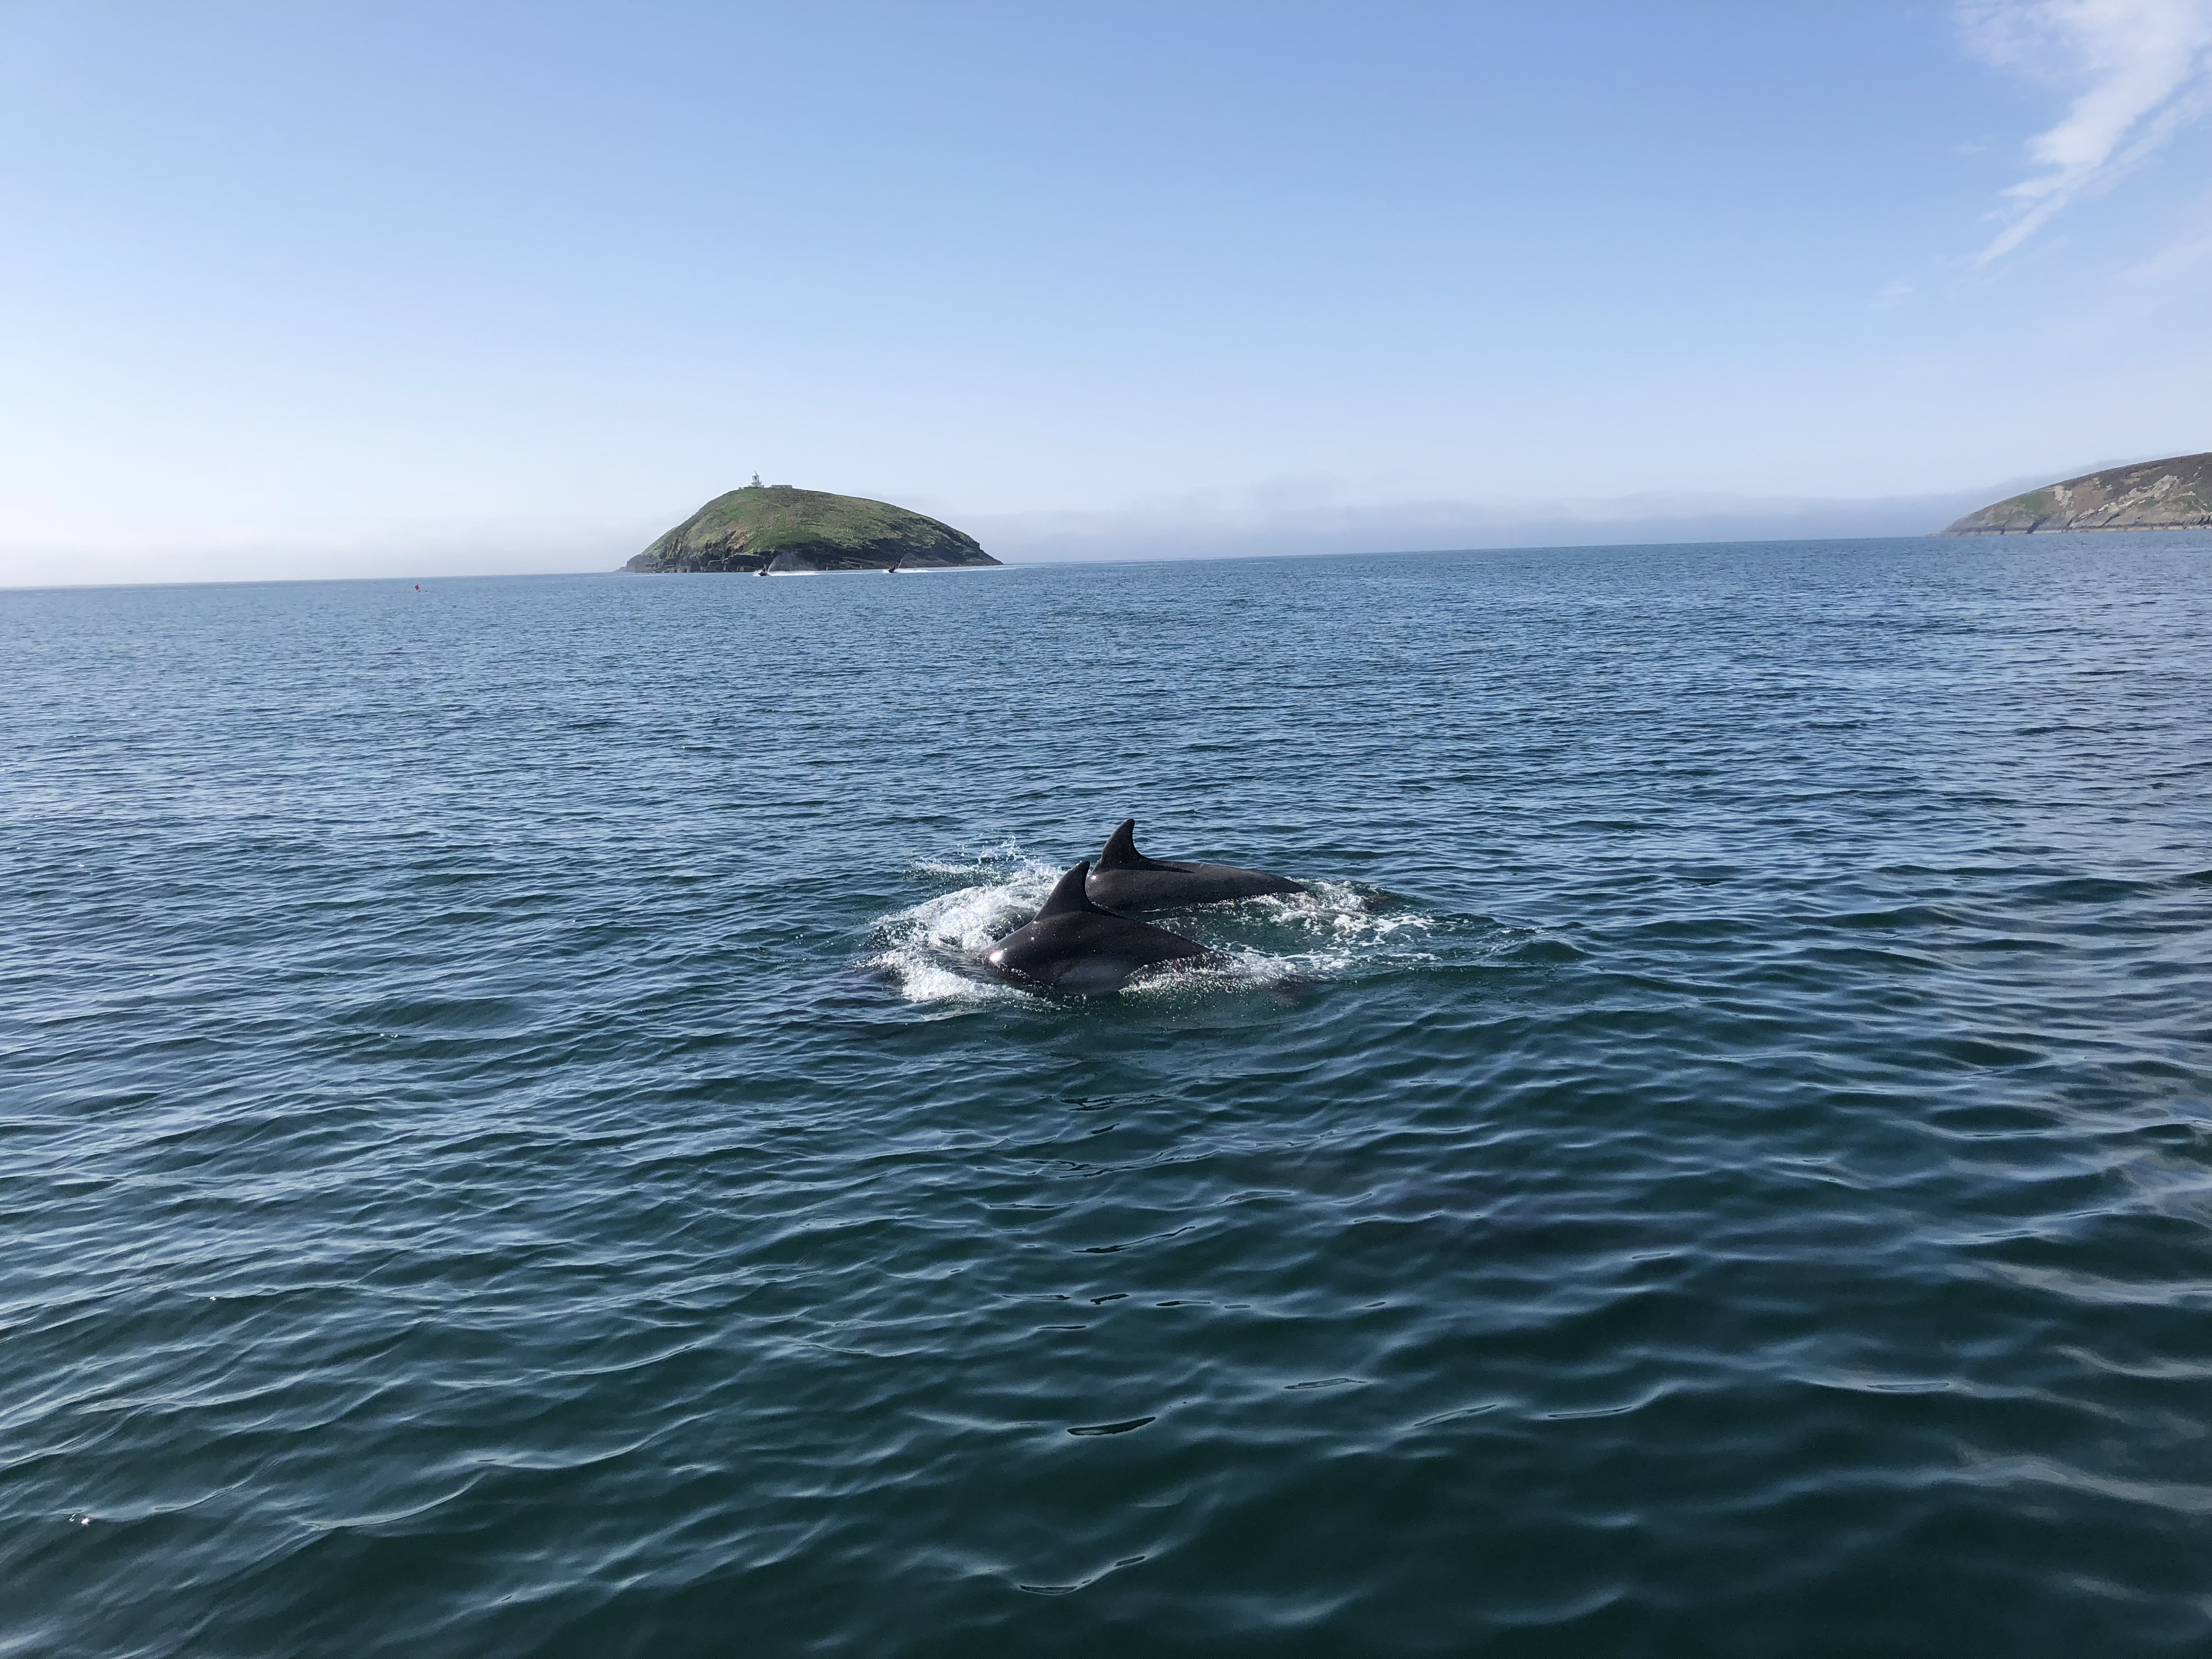 Bottlenose dolphins leaping around the boat “Chloe Lou” – Photo: copyright Toby Huddlestone